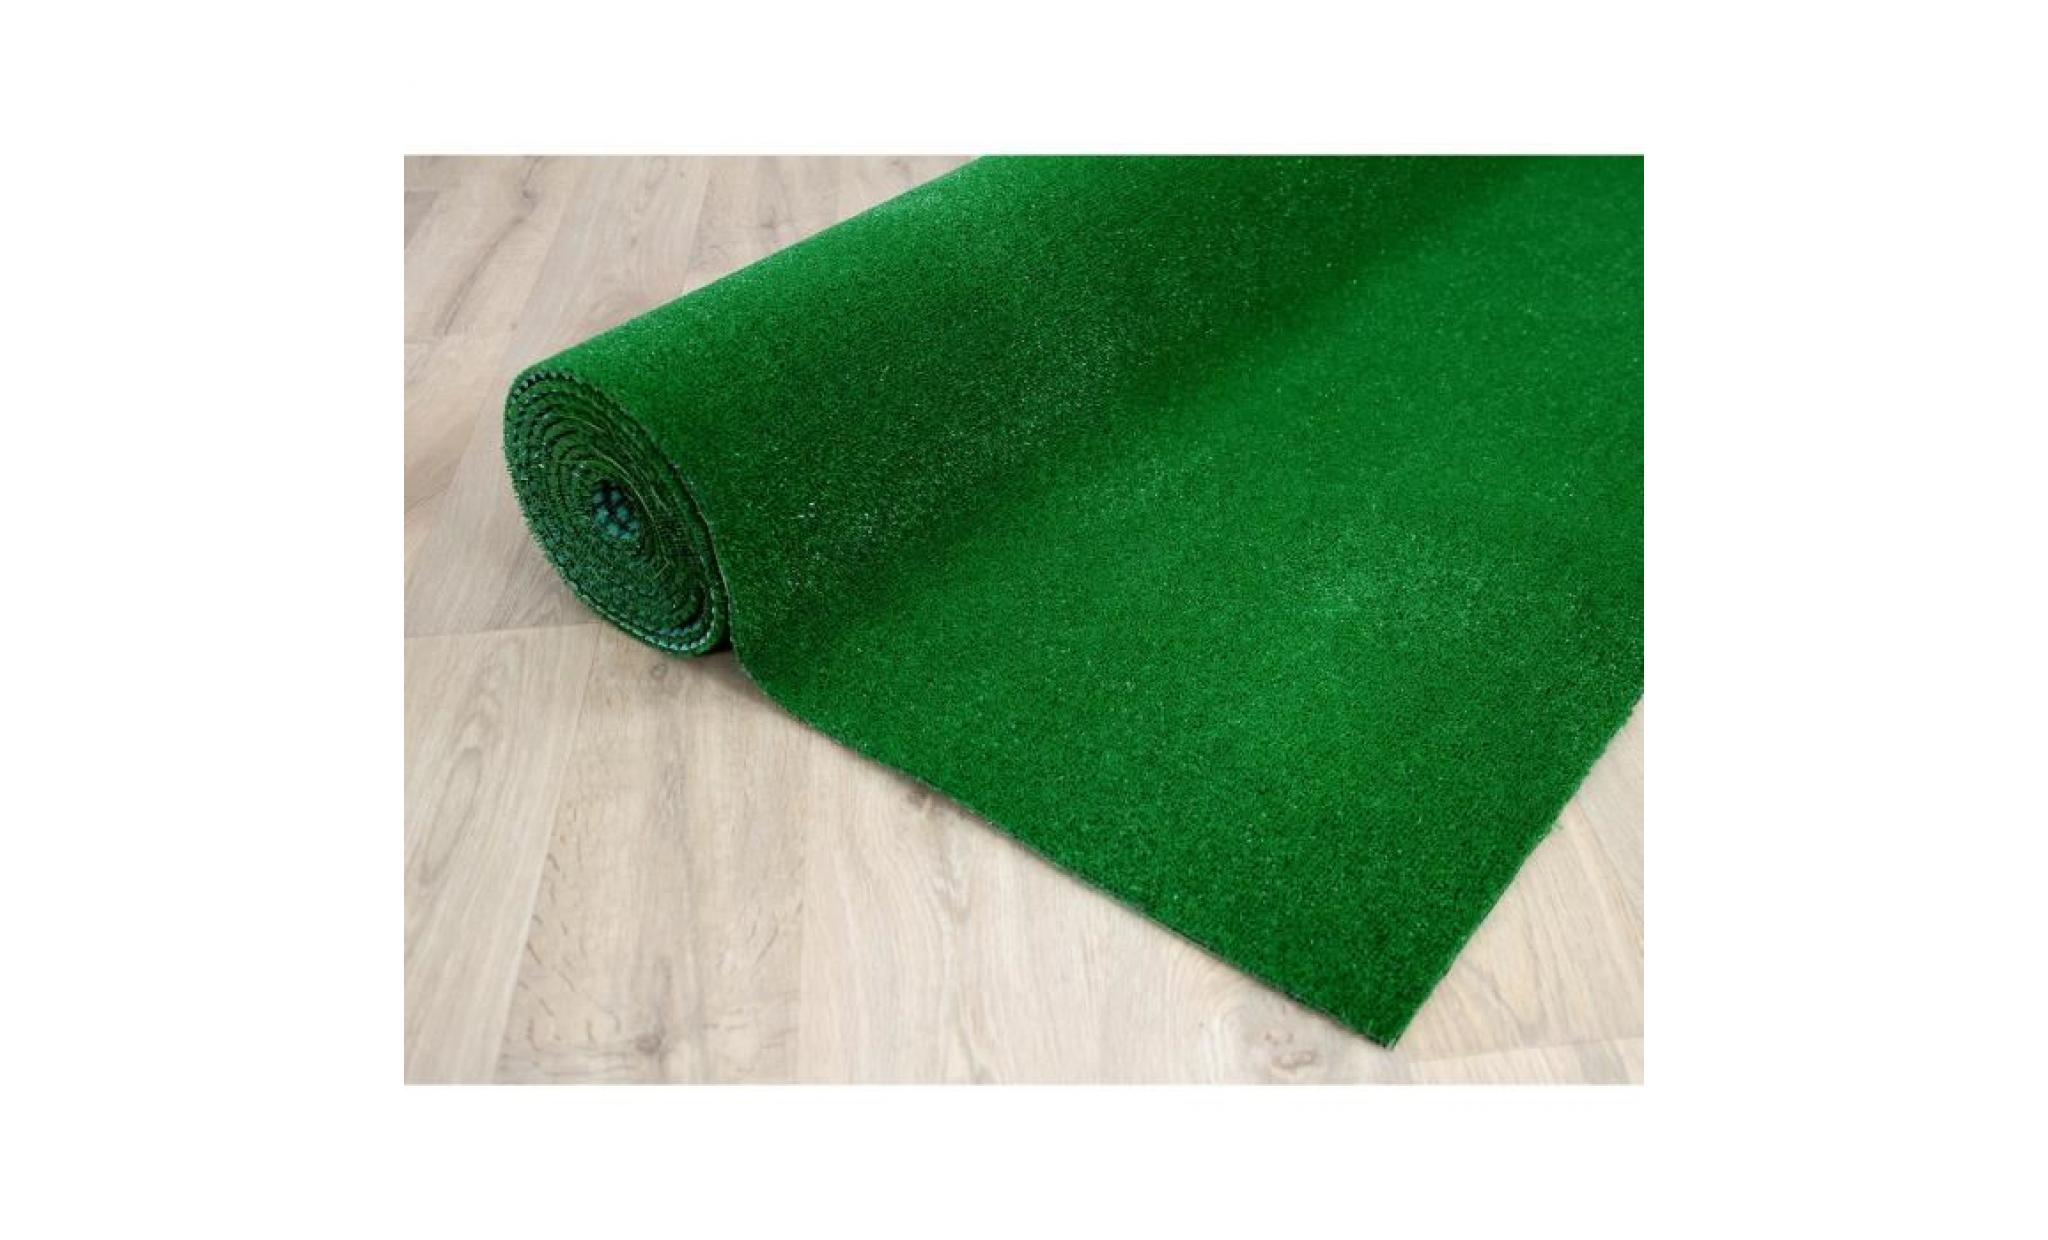 york   tapis type gazon artificiel avec nubs – pour jardin, terrasse, balcon   vert   [200x400 cm]